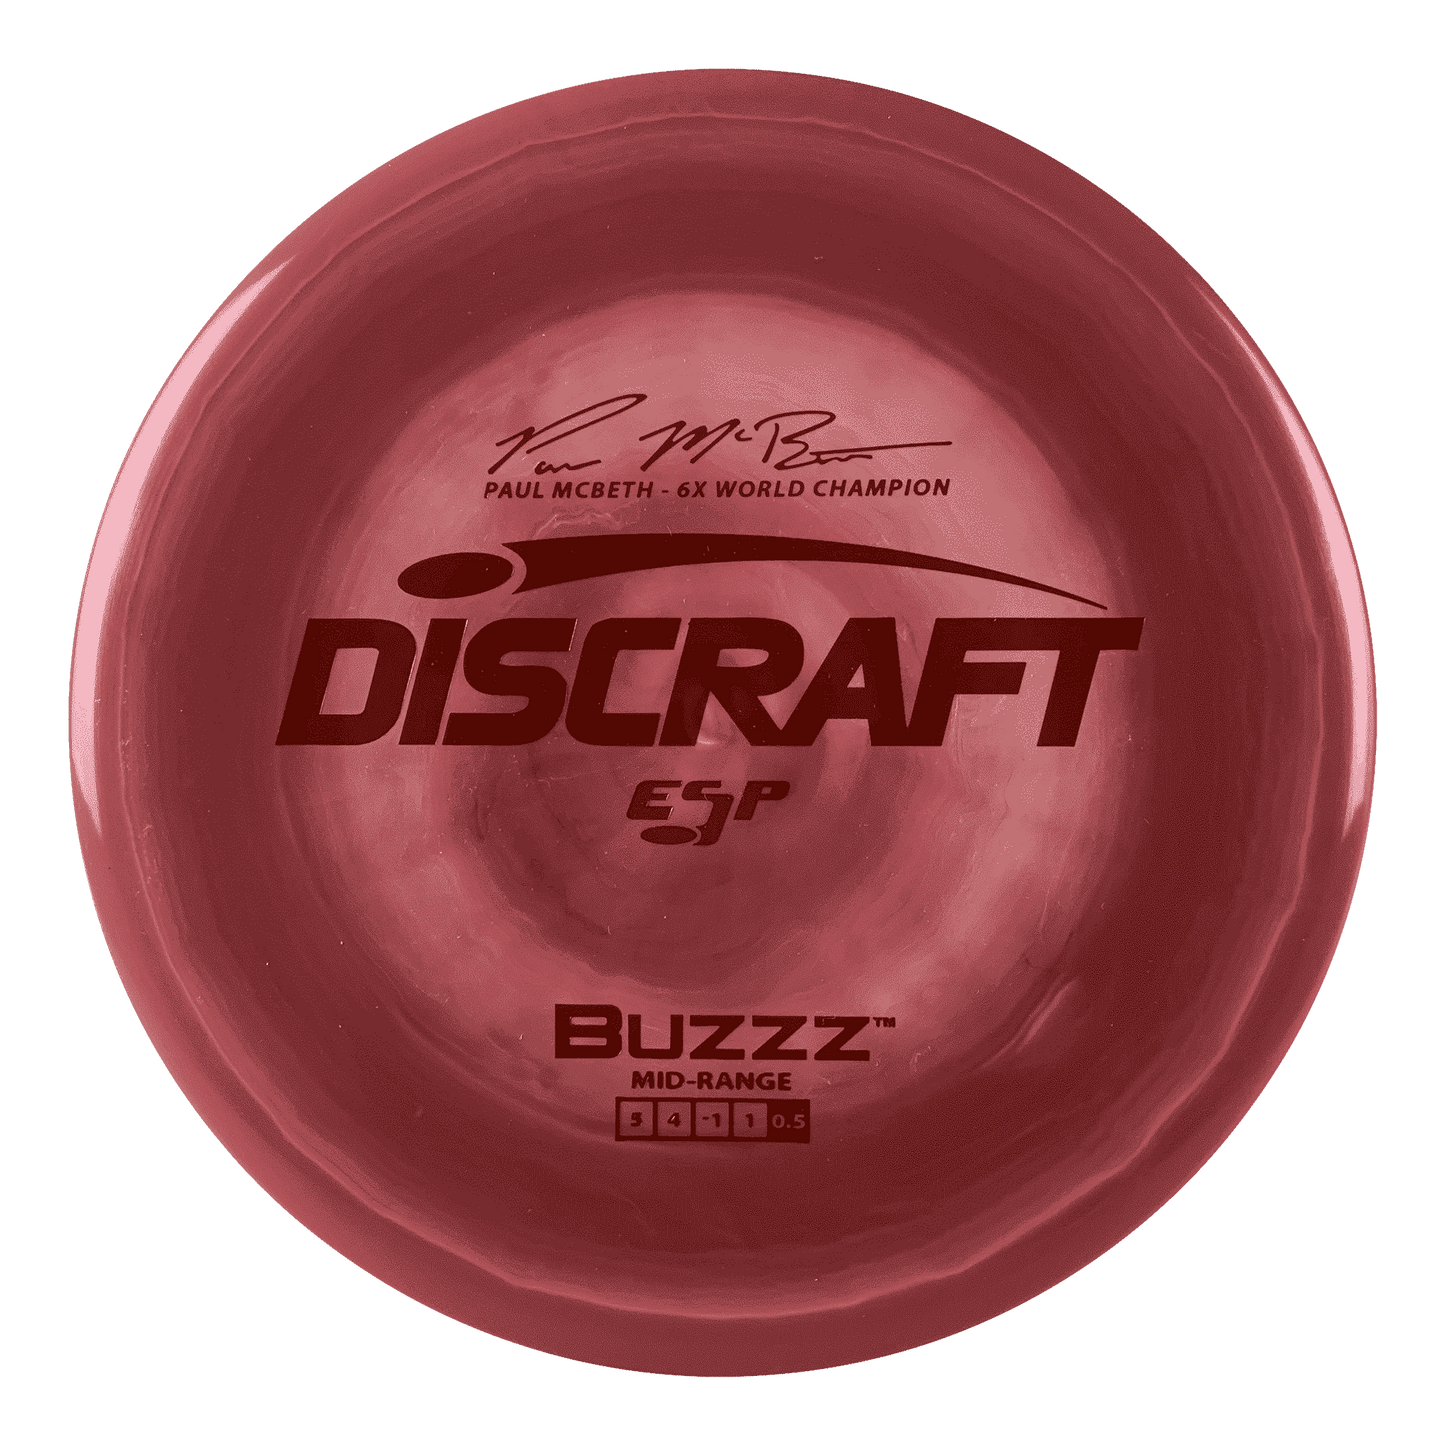 ESP Buzzz - Paul McBeth 6x Disc Discraft burgundy 181 